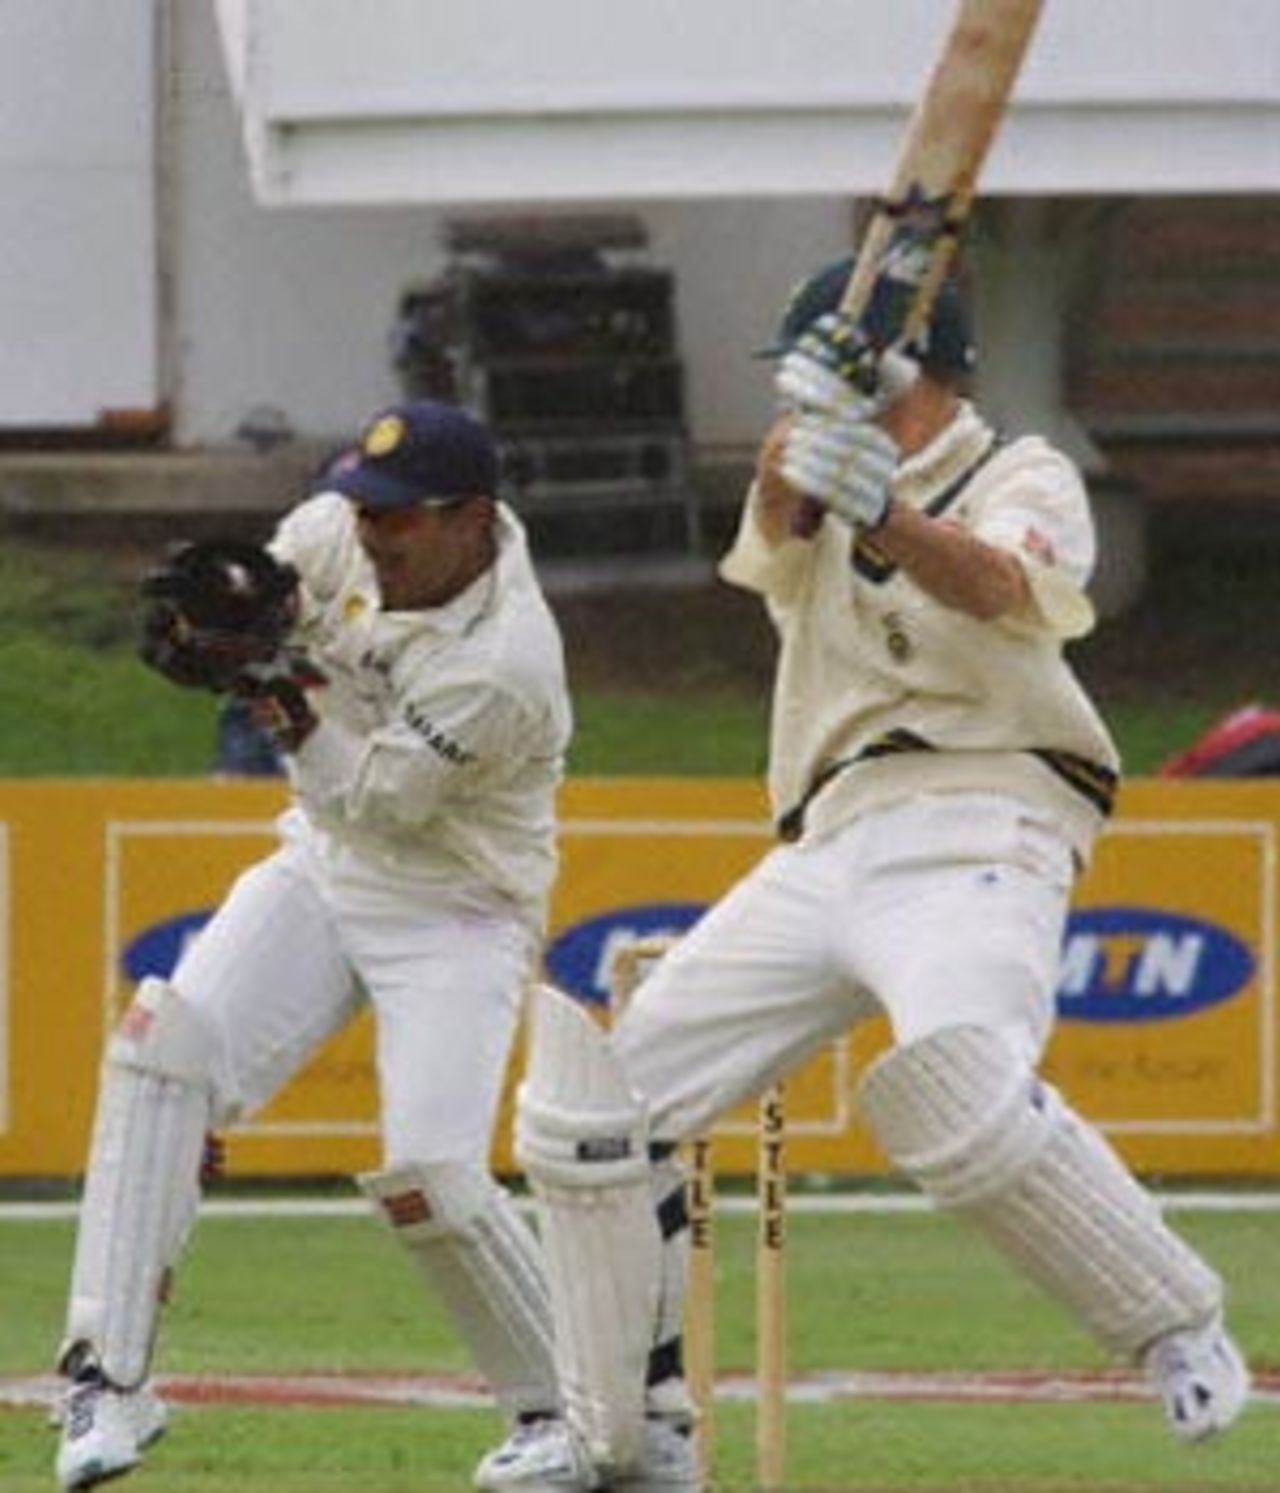 South Africa v India, 2nd Test match, Day One, Crusaders Ground, St George's Park, Port Elizabeth, 16-20 November 2001